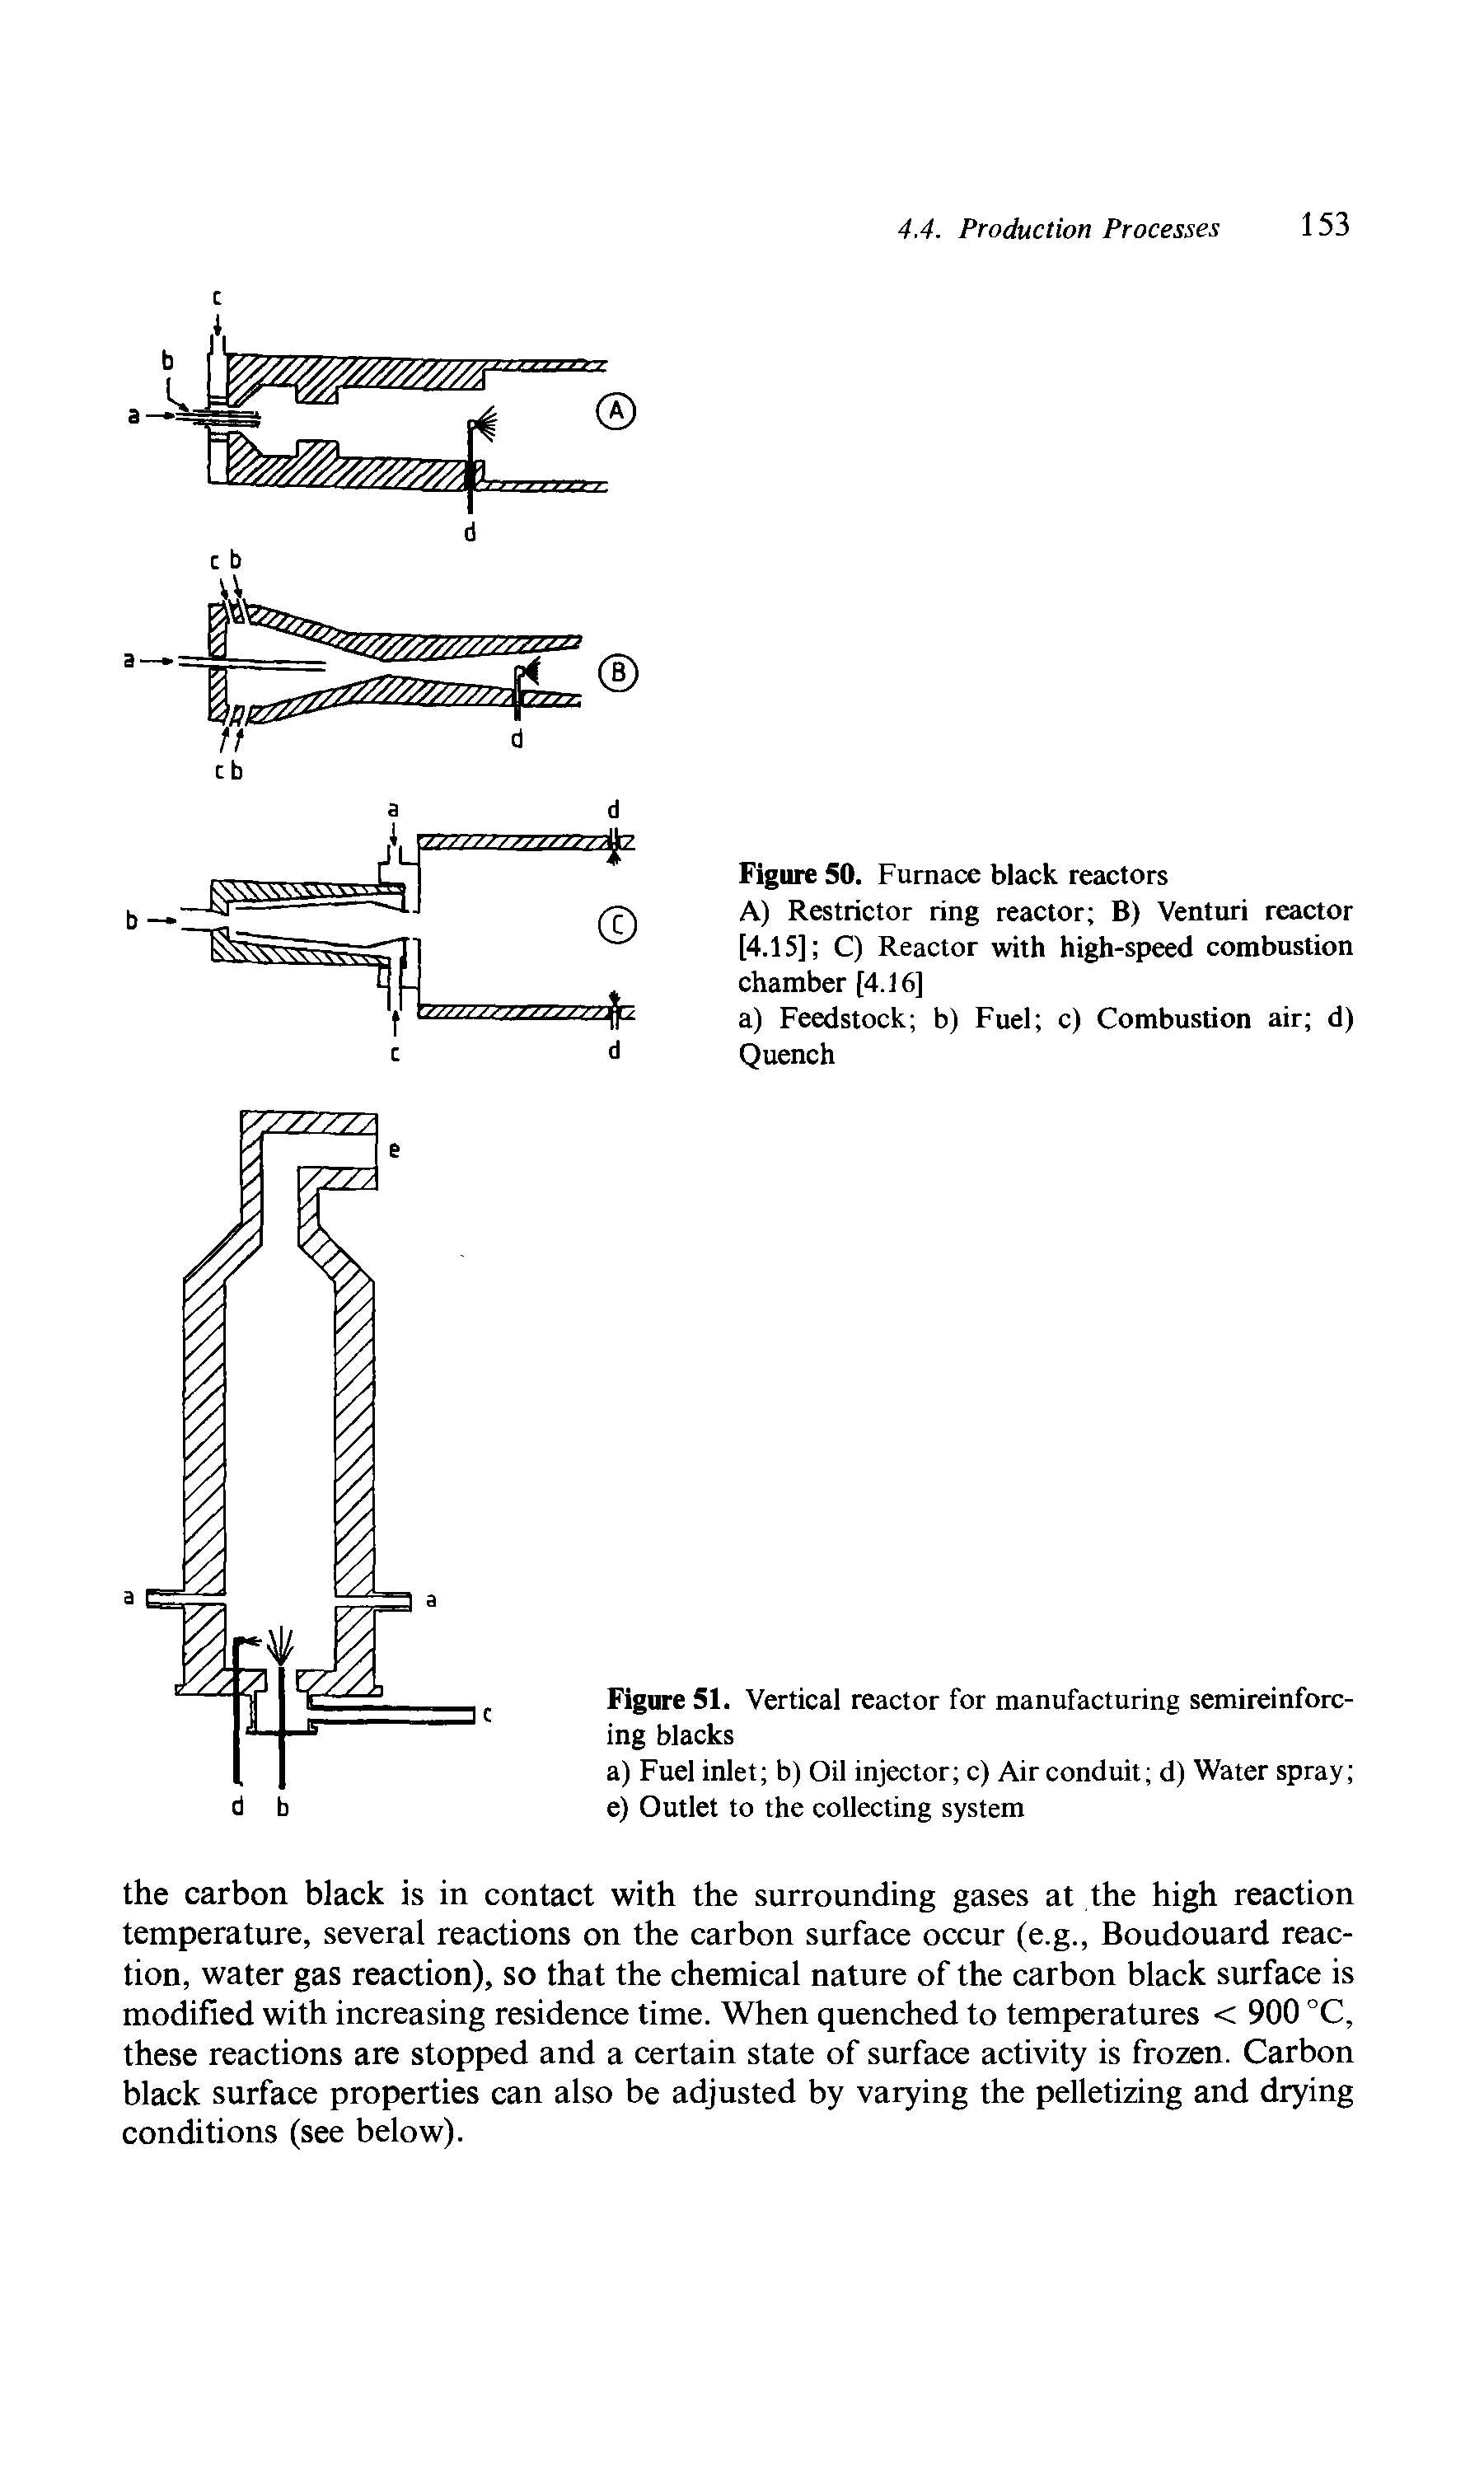 Figure 51. Vertical reactor for manufacturing semireinforcing blacks...